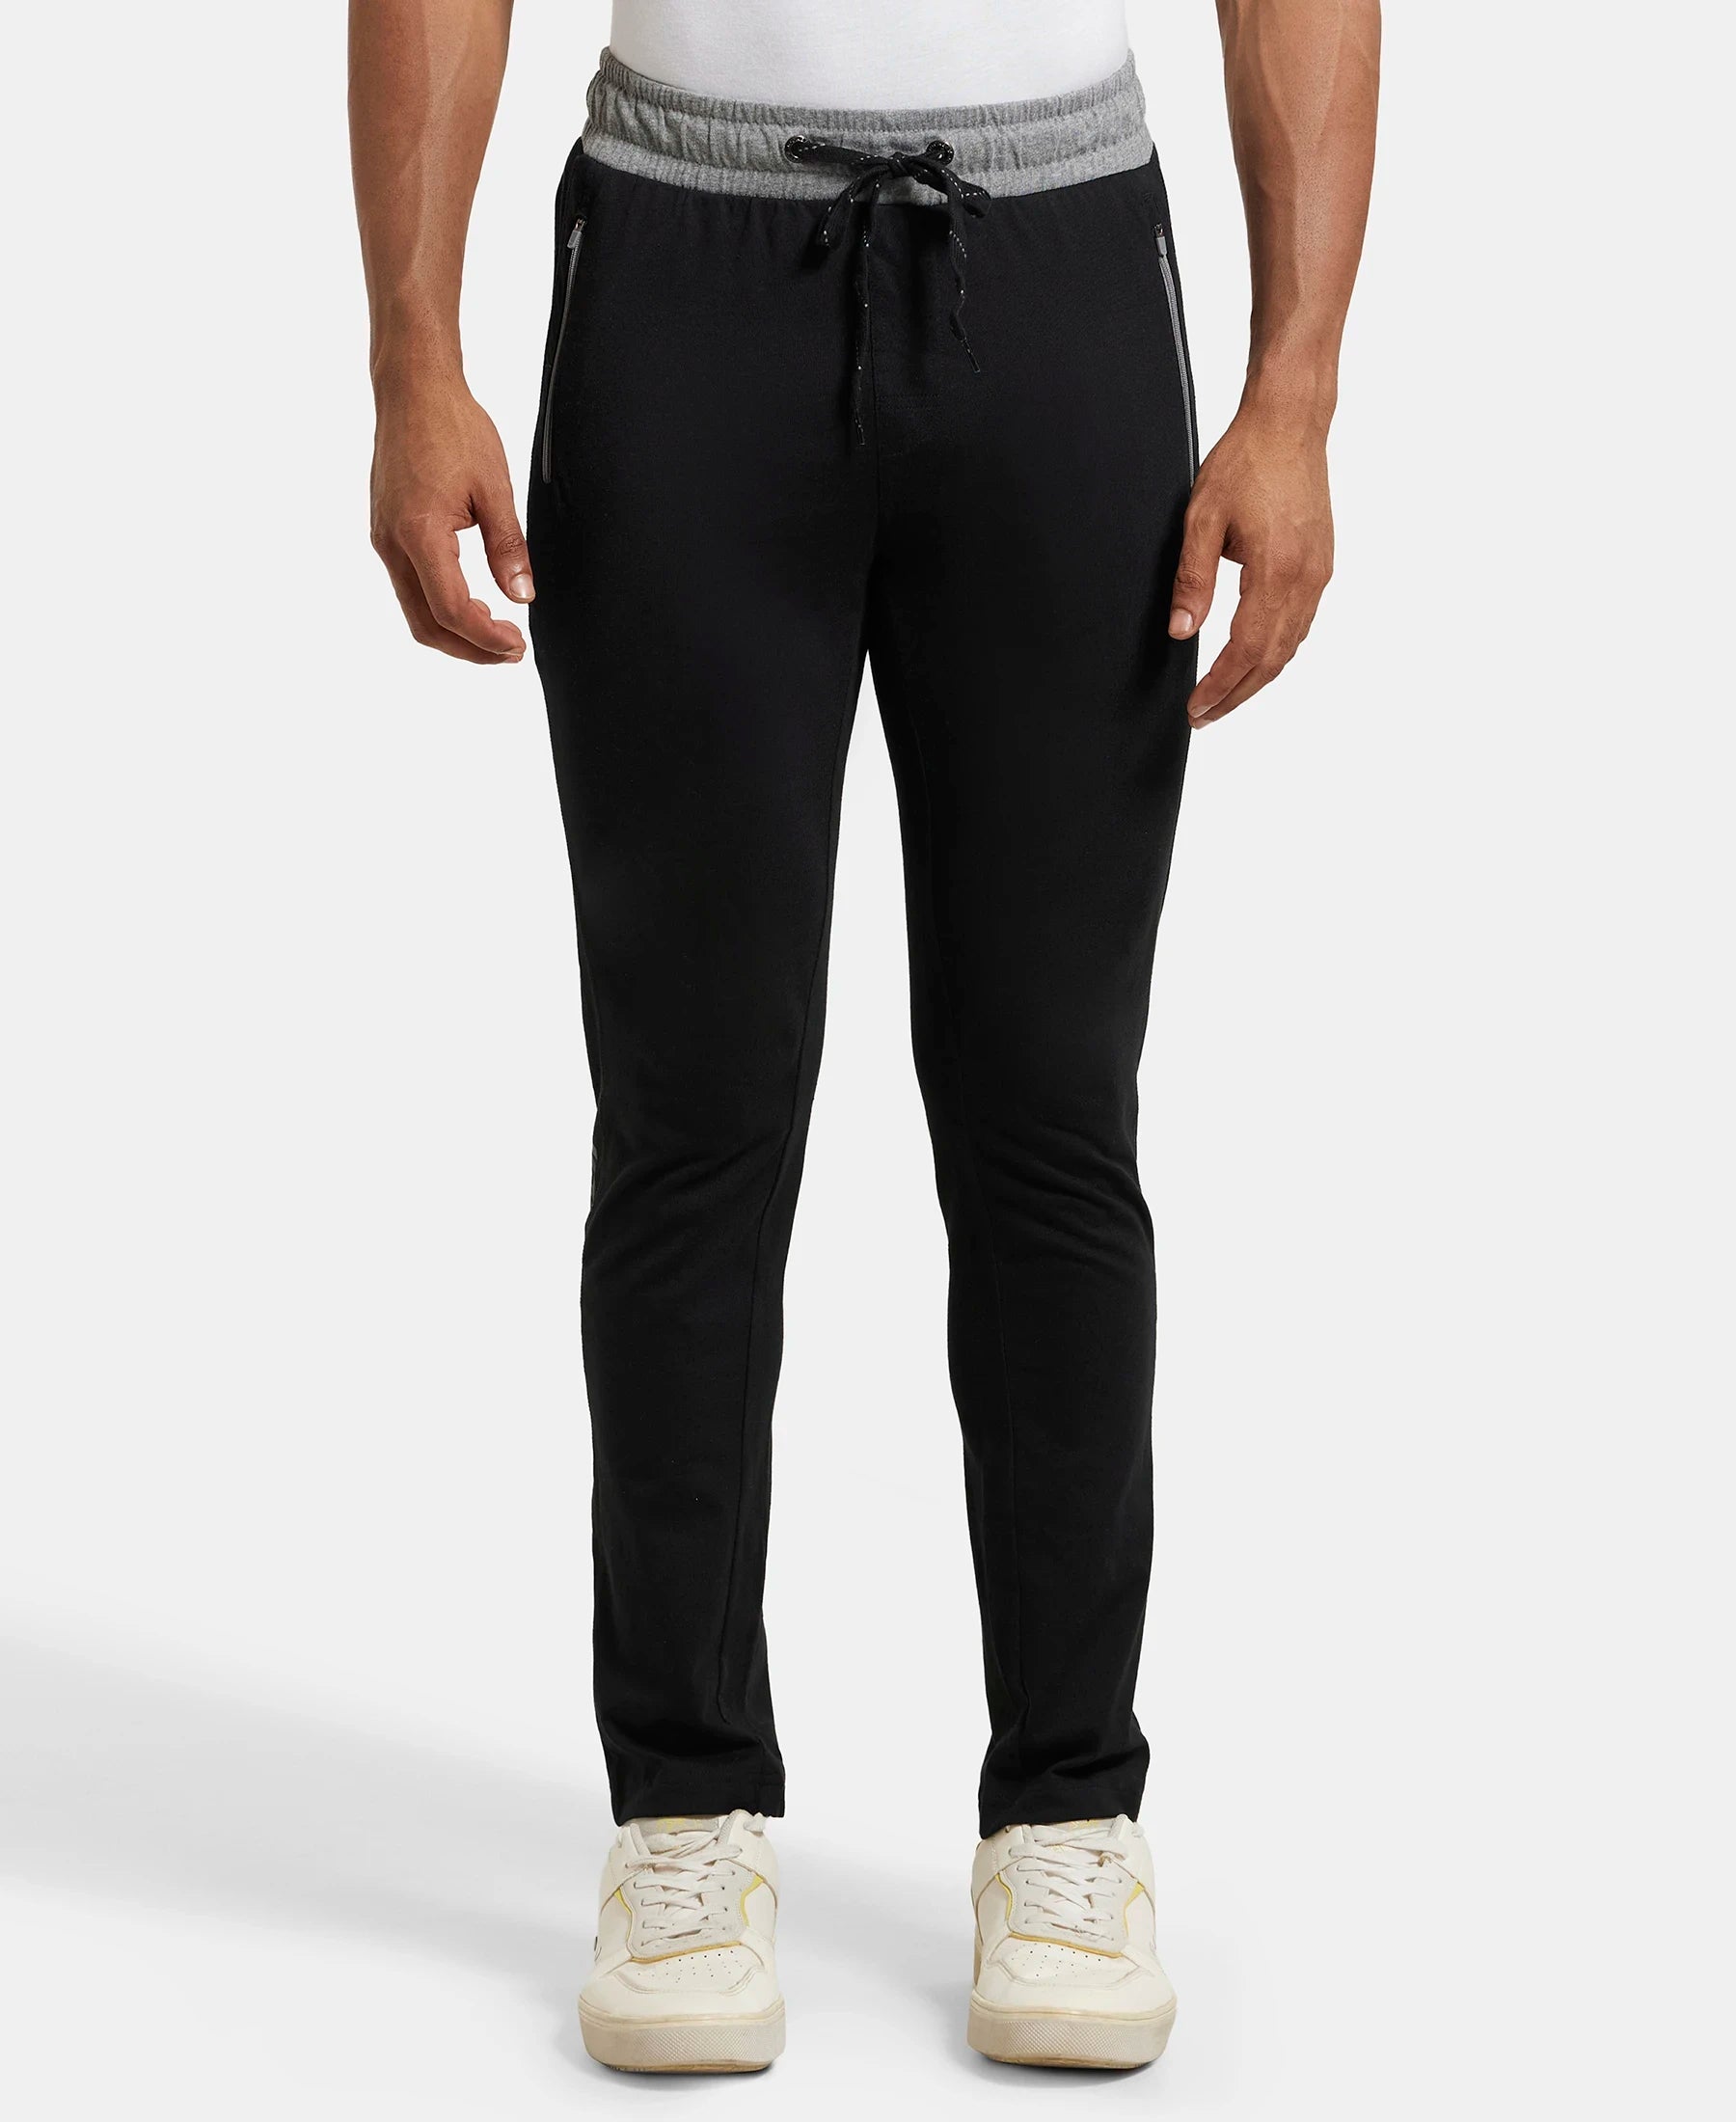 Buy Super Combed Cotton Rich Slim Fit Trackpant with Side Zipper Pockets -  Black & Grey Melange 9510